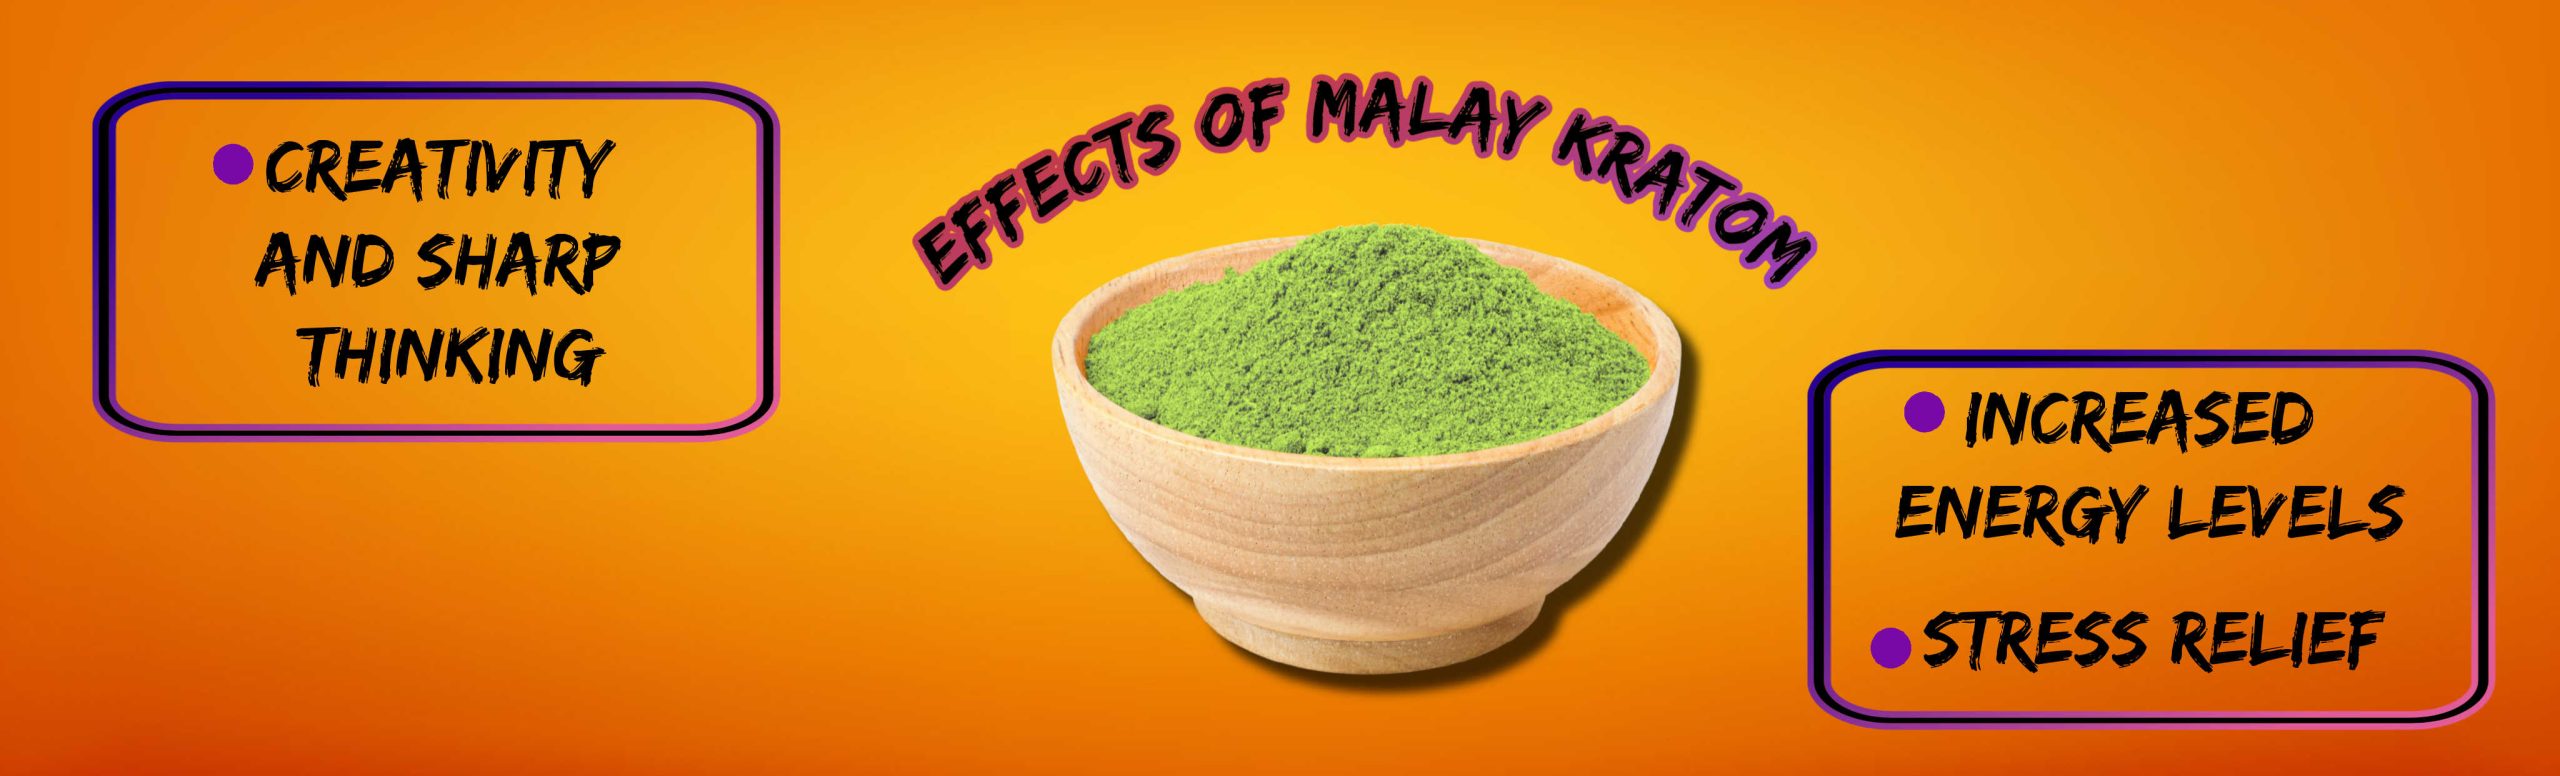 image of malay kratom effects